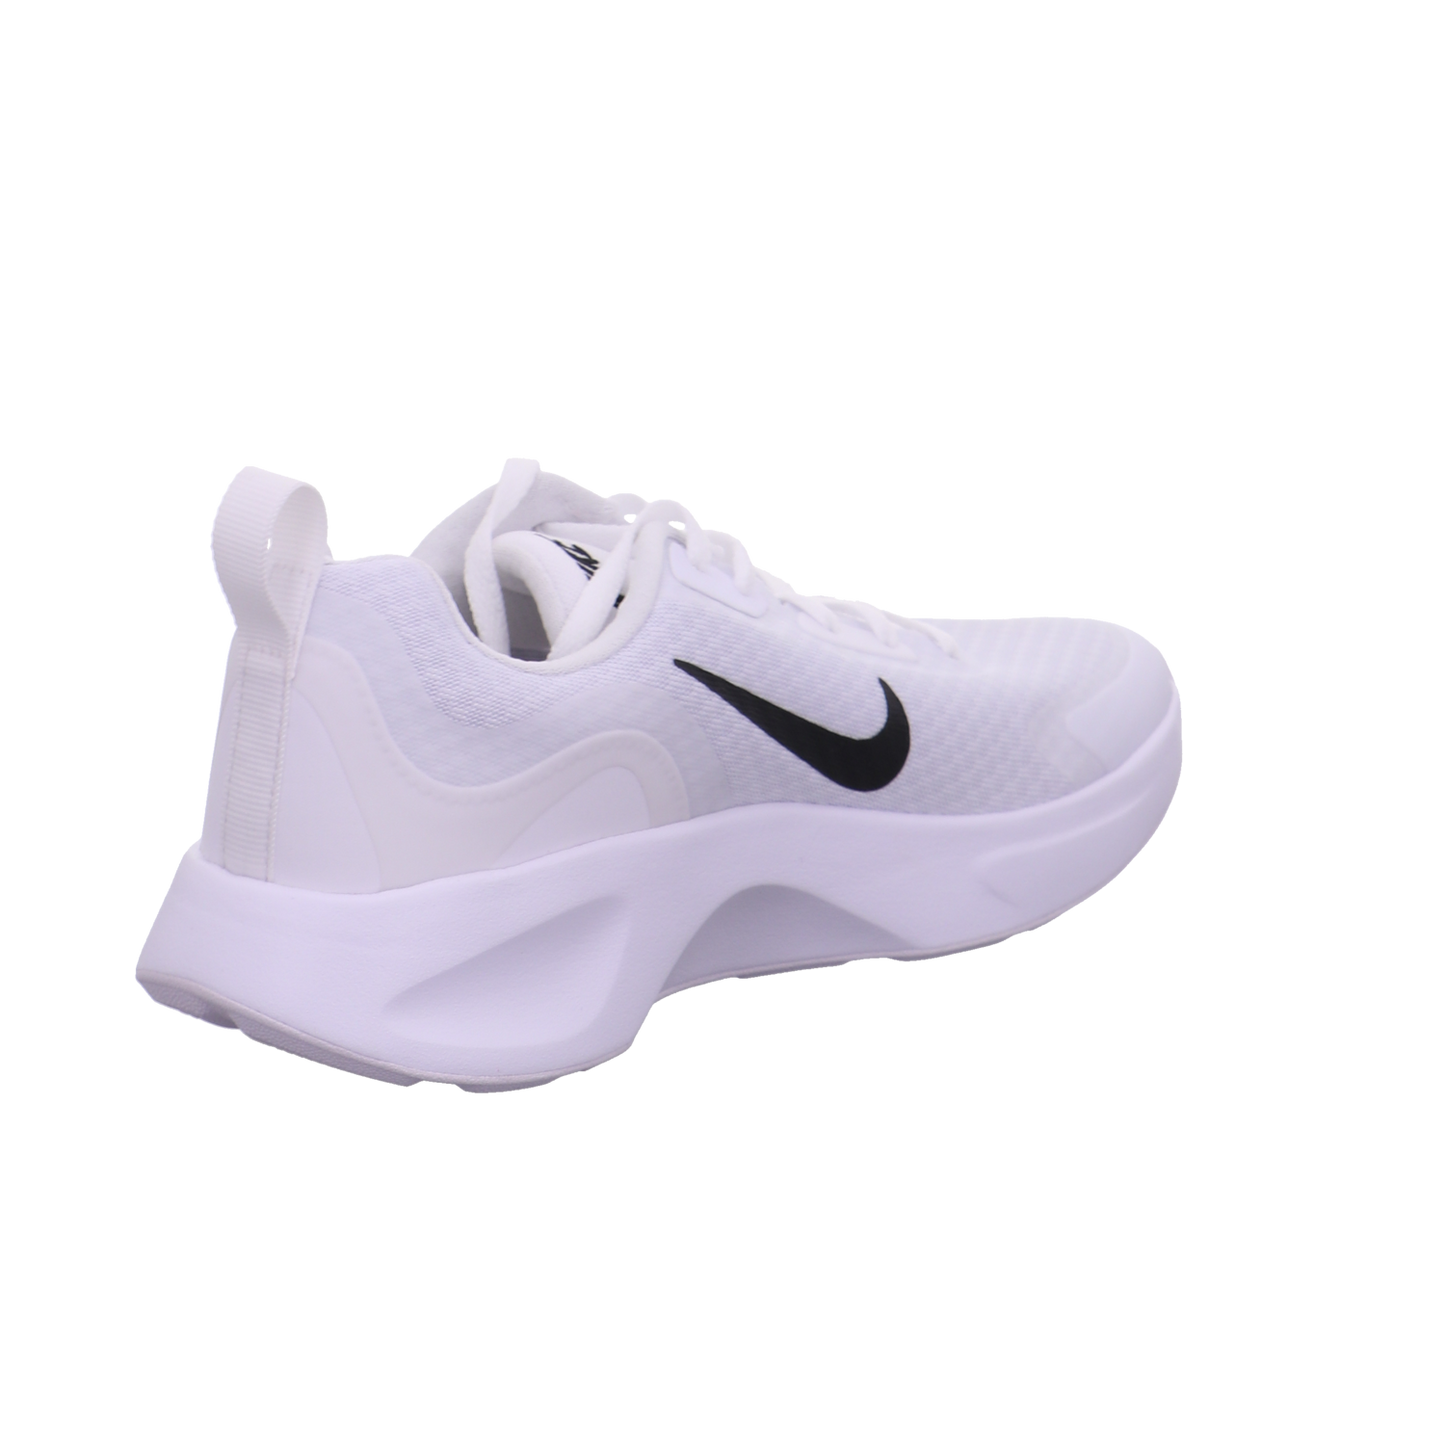 Nike Sneaker weiß-schwarz Bild5